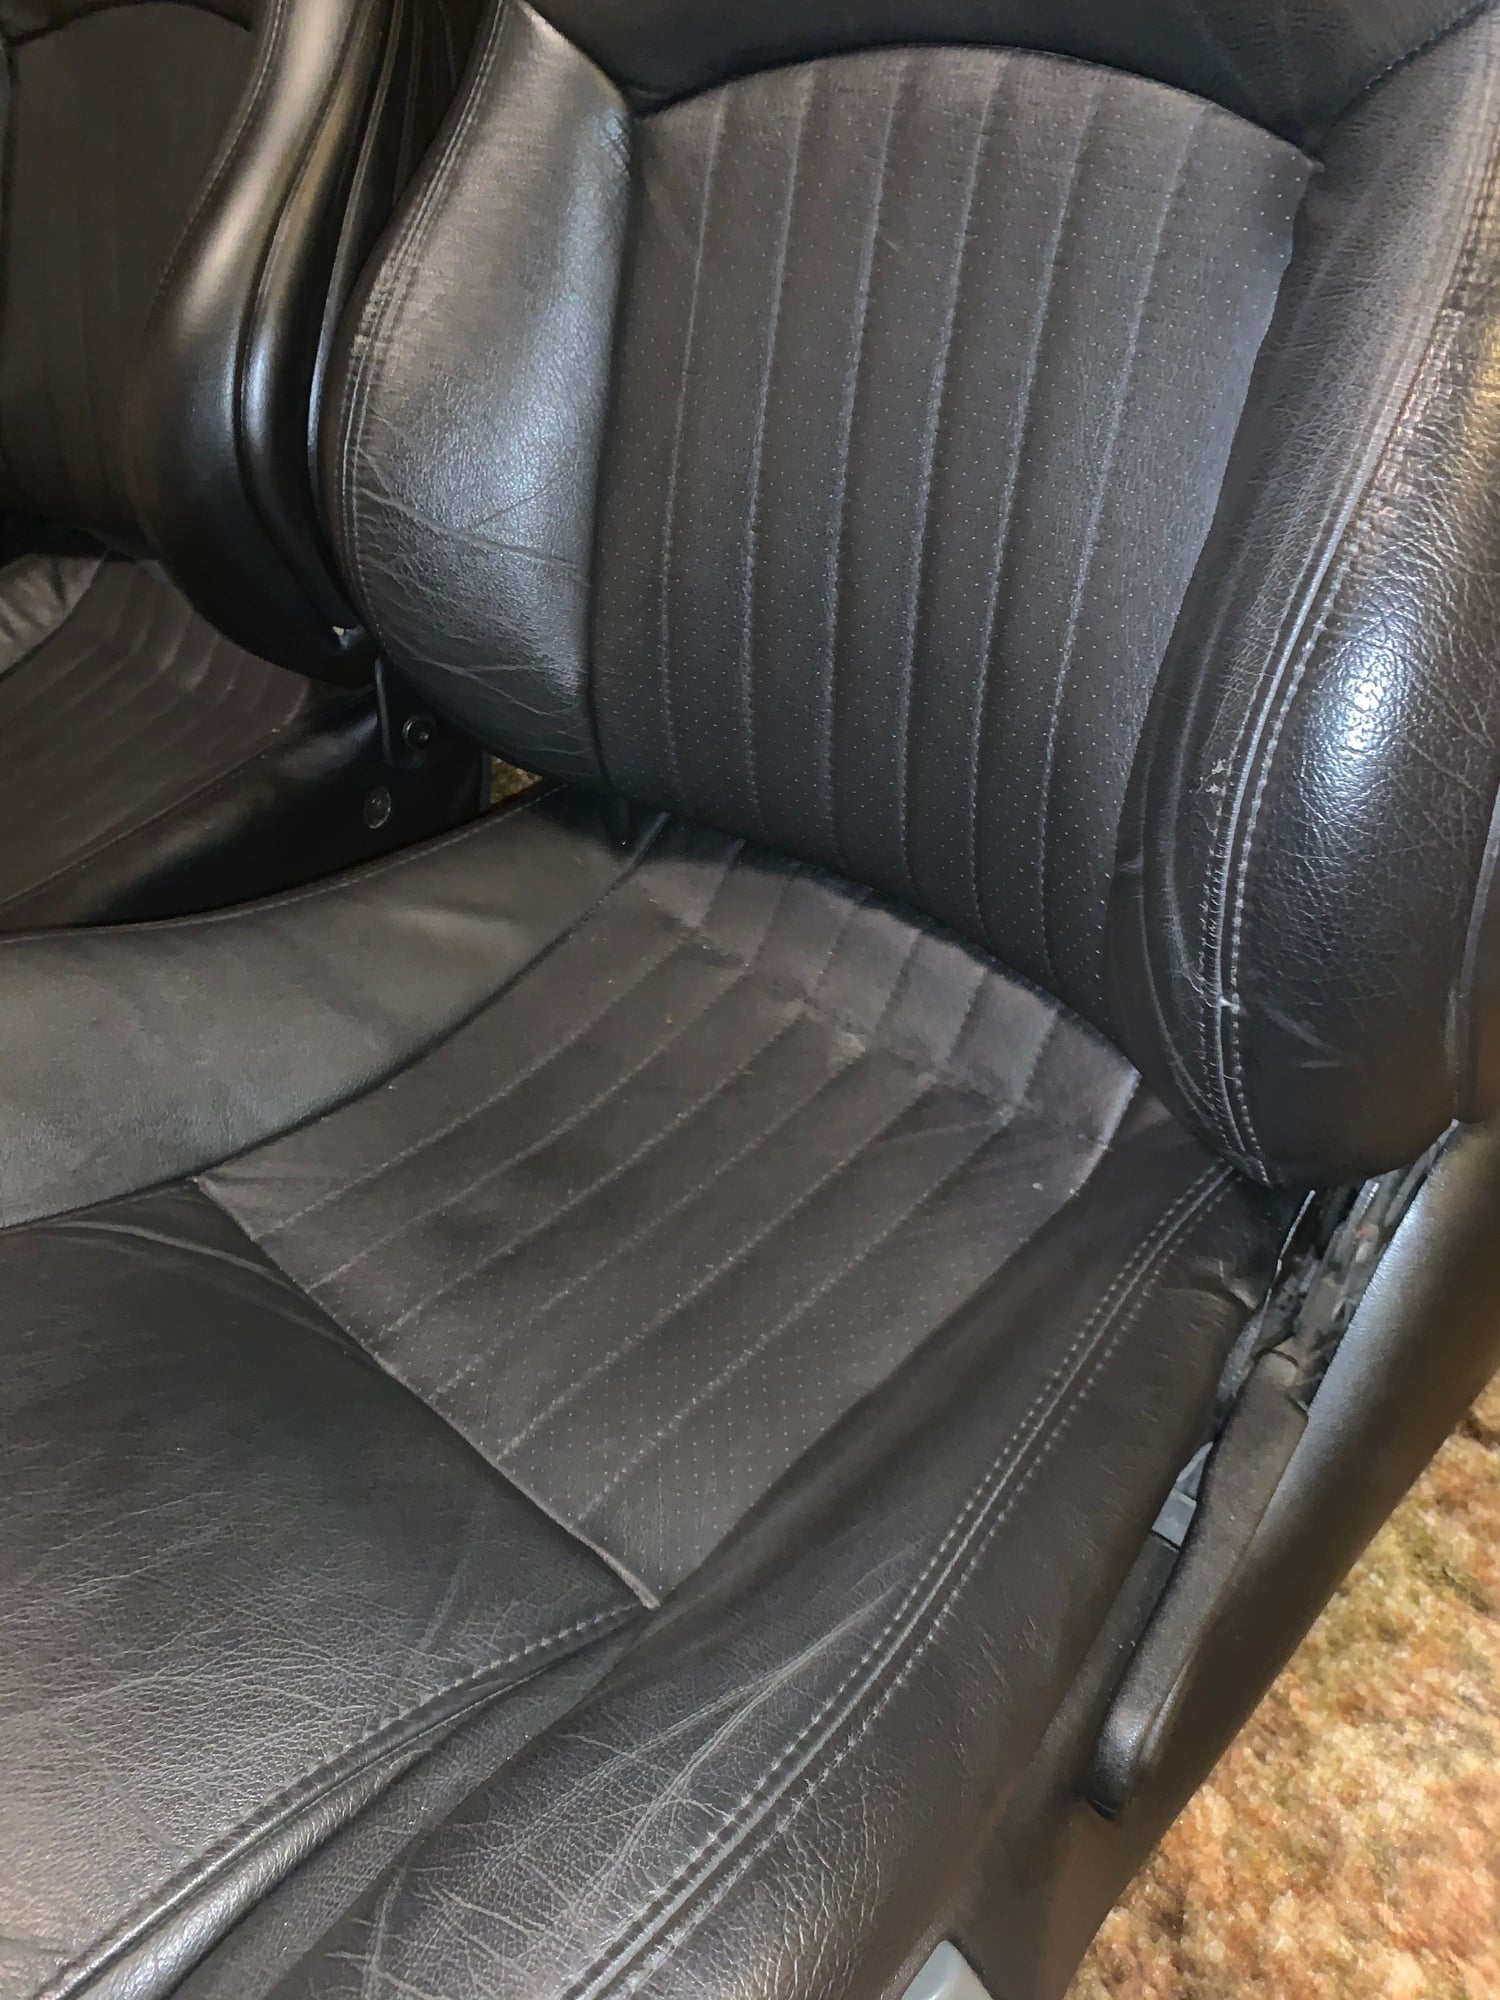  - Leather trans am ws6 power seats 4th gen f body firebird, ws6, firehawk, - Hutchinson, KS 67502, United States